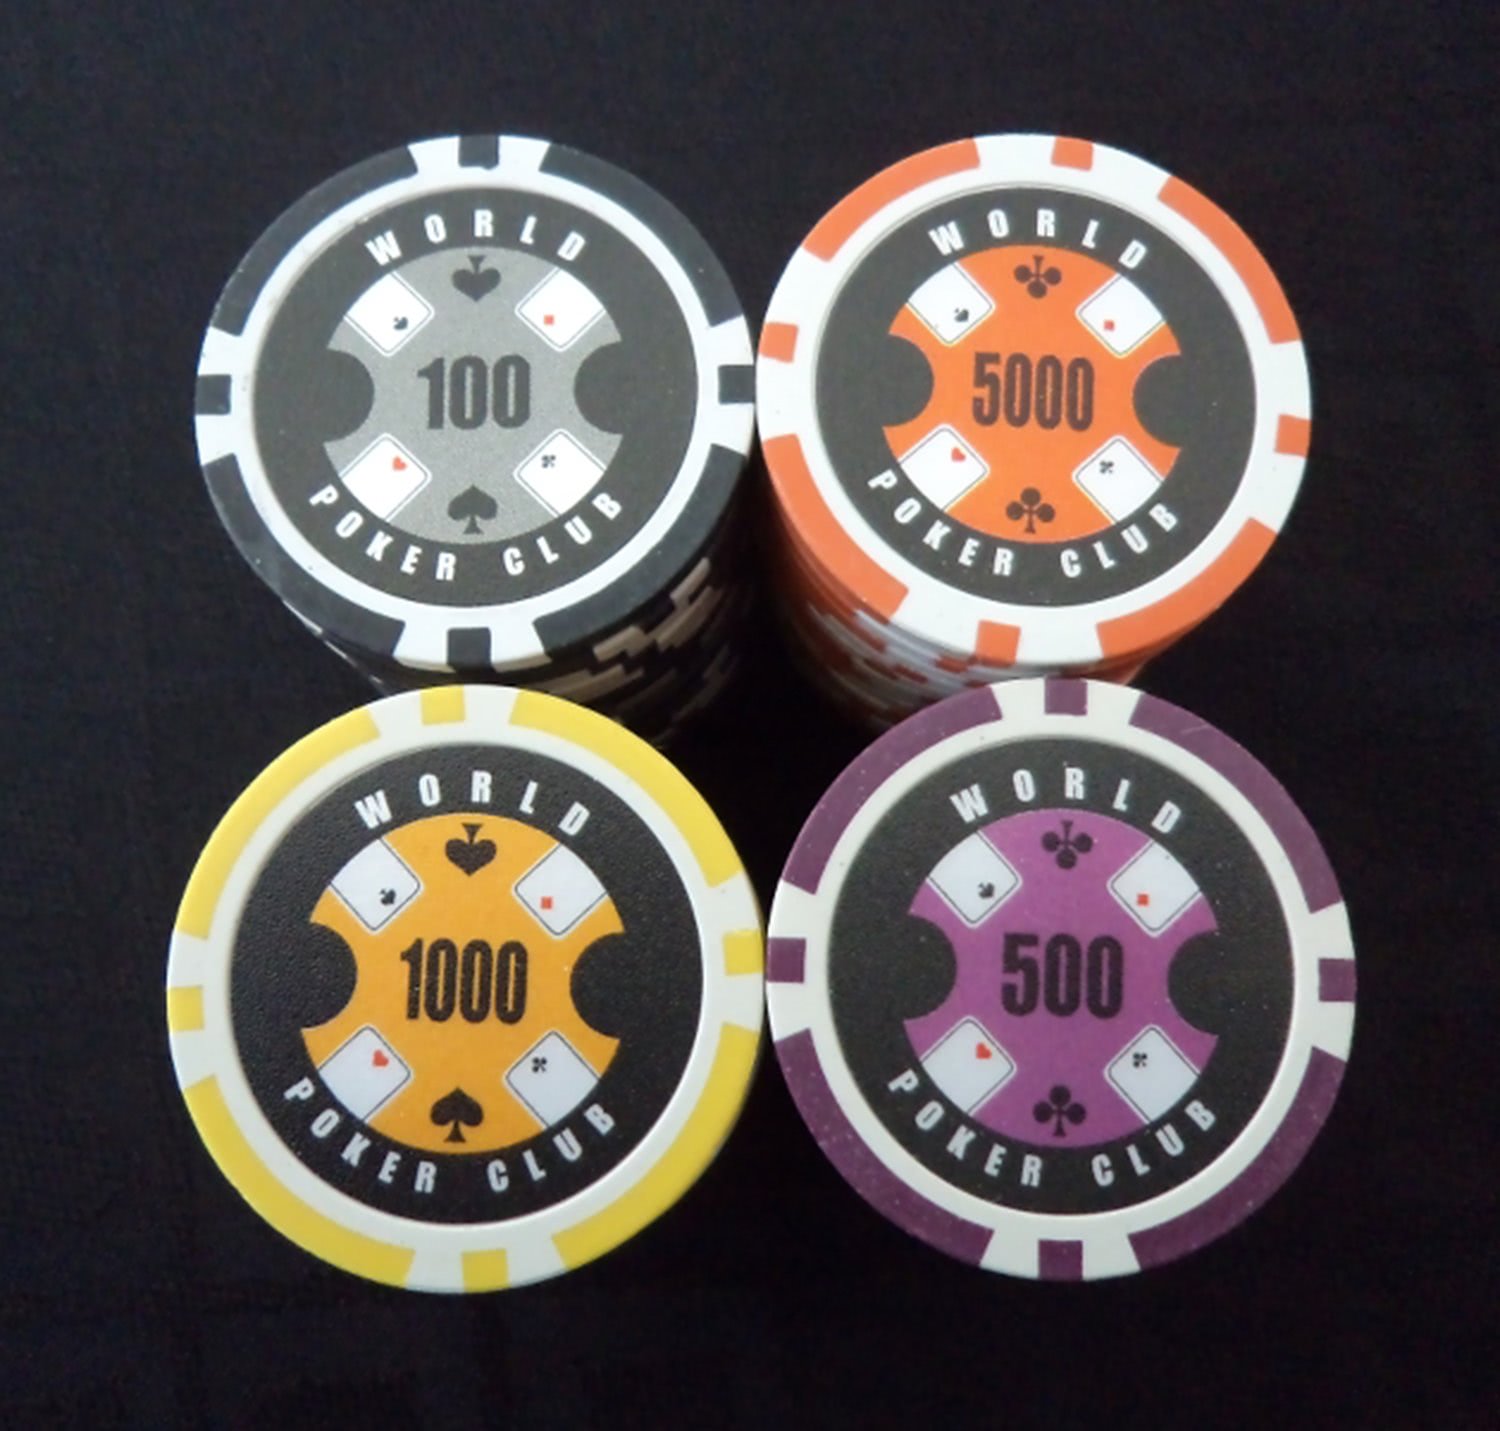 lucky brand poker game set